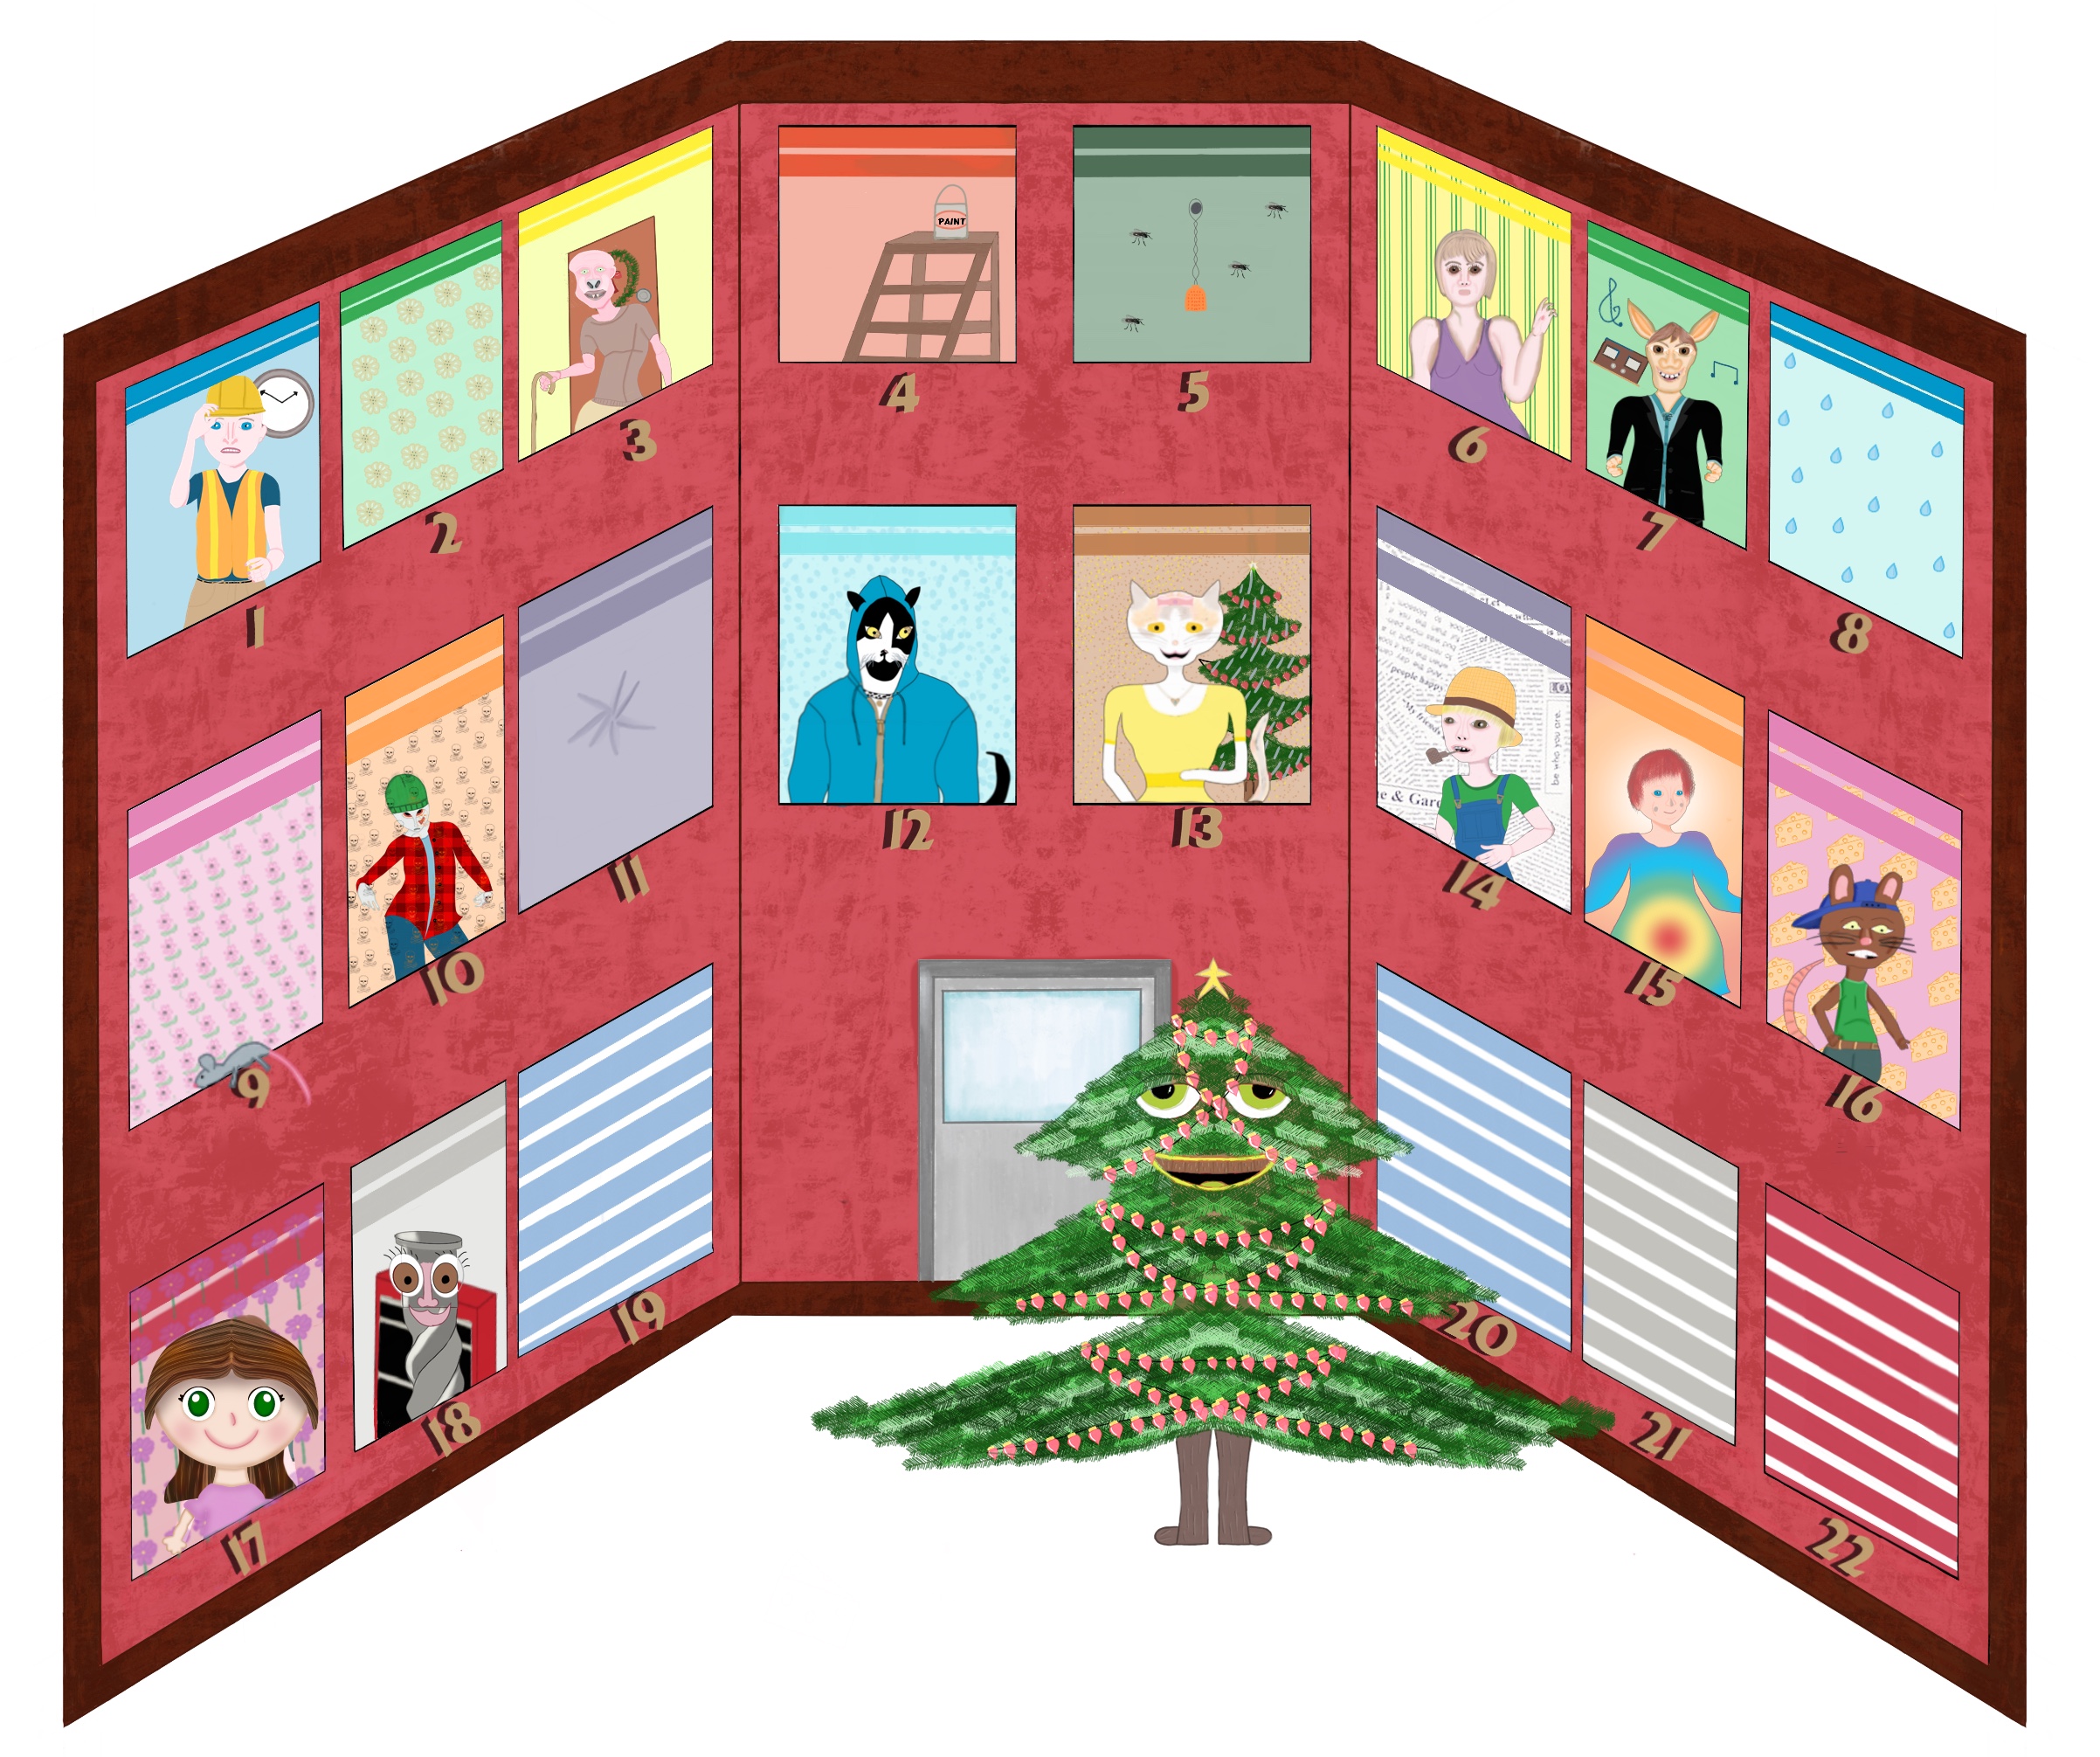 Apartment 18 – A Constructive Christmas